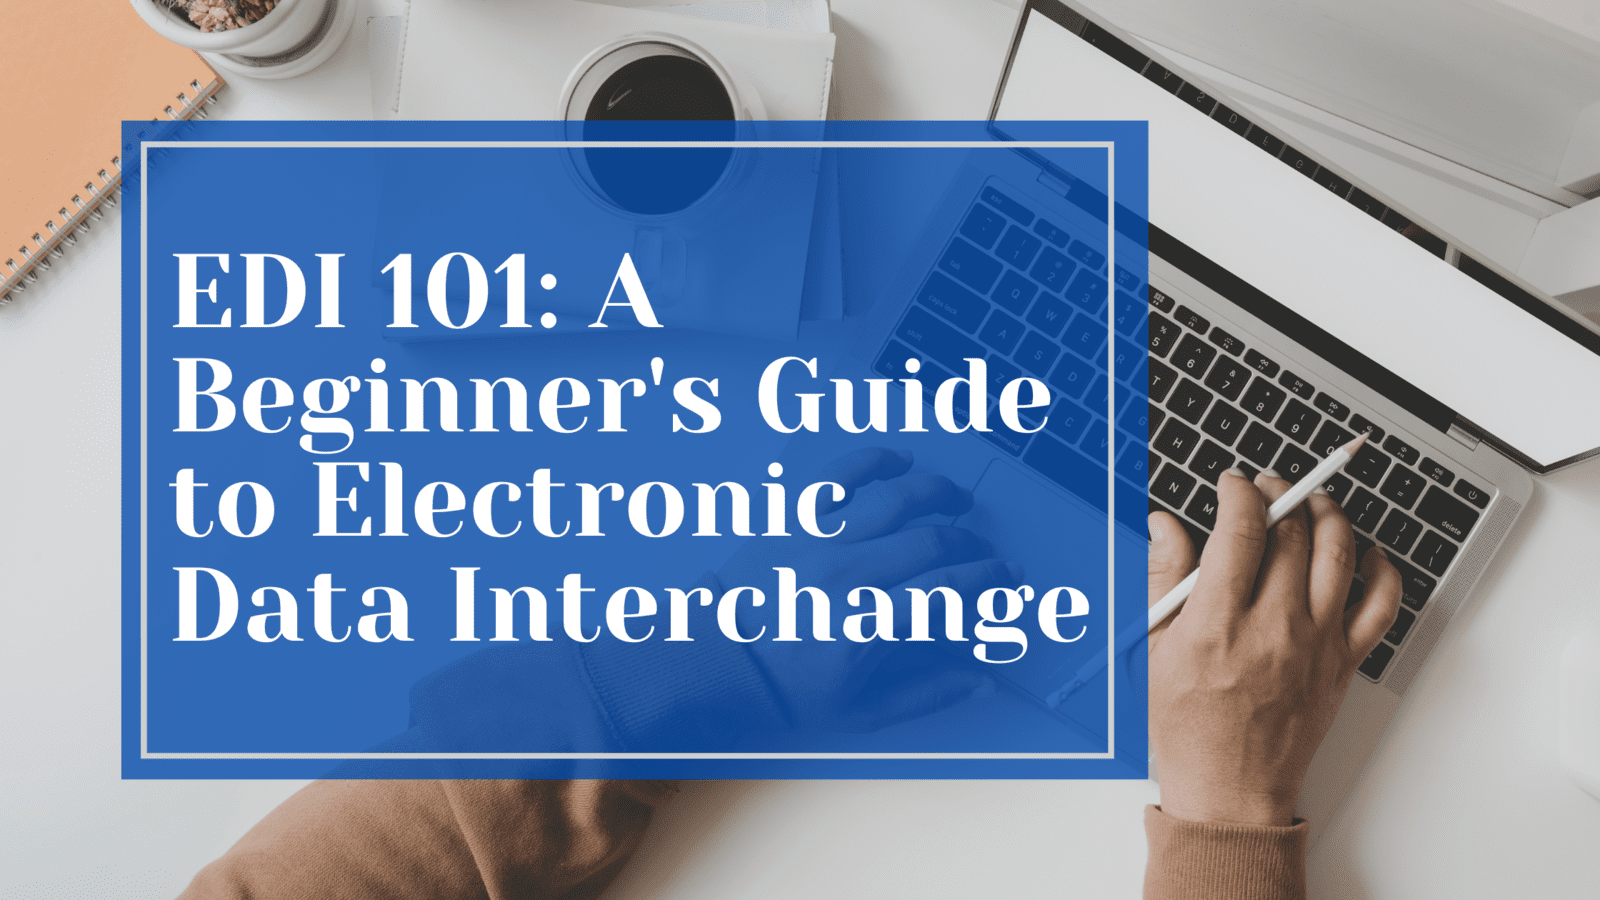 EDI 101: A Beginner's Guide to Electronic Data Interchange